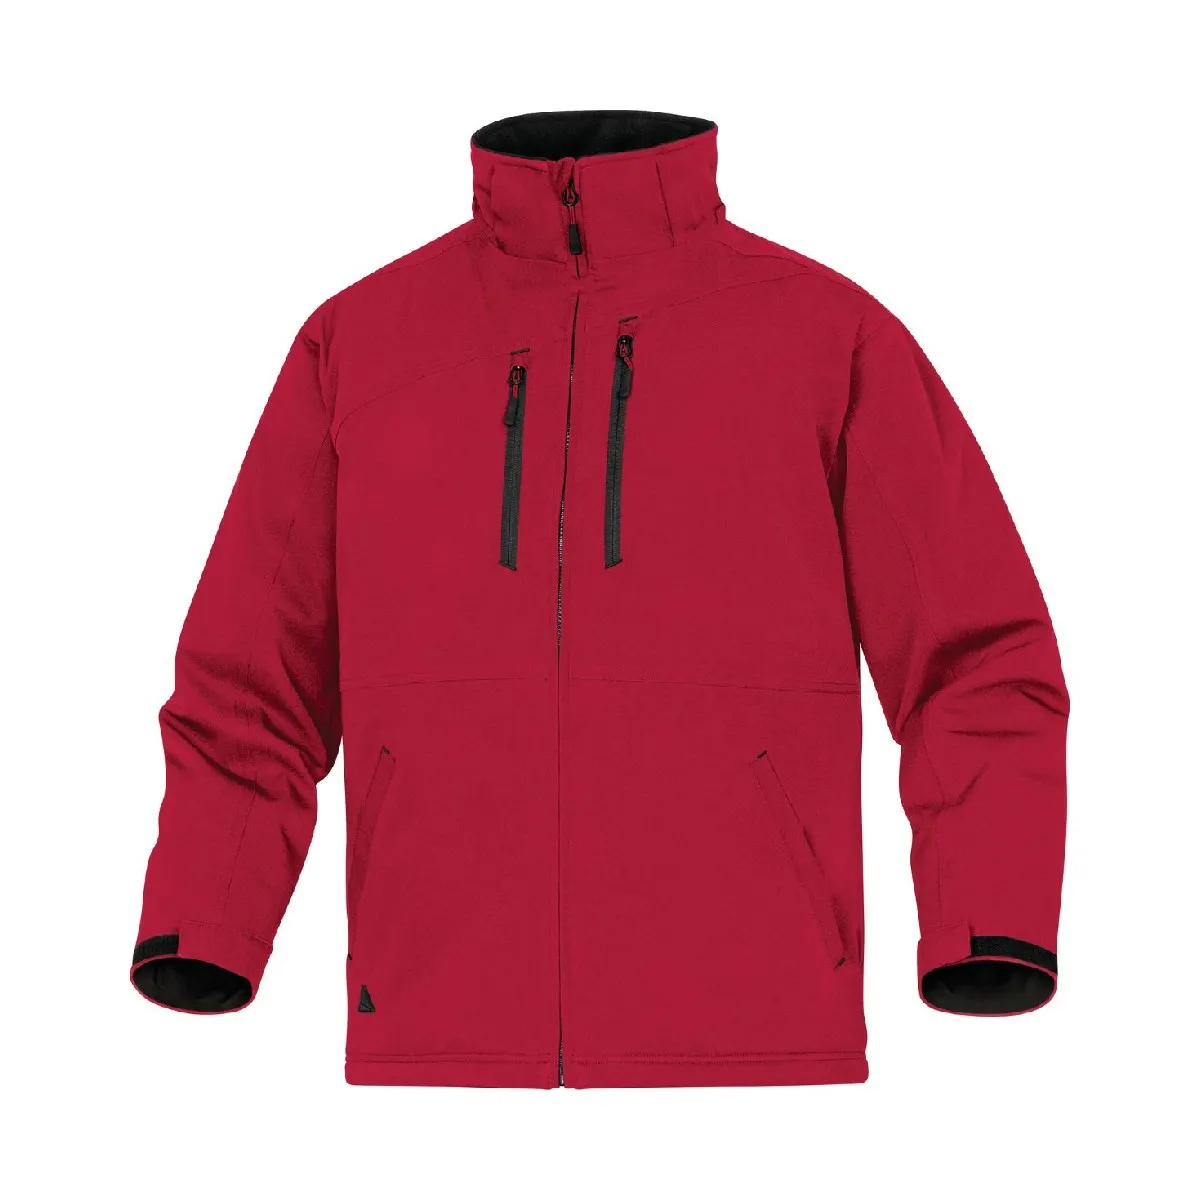 Zimska jakna MILTON2 crvena - Delta Plus 